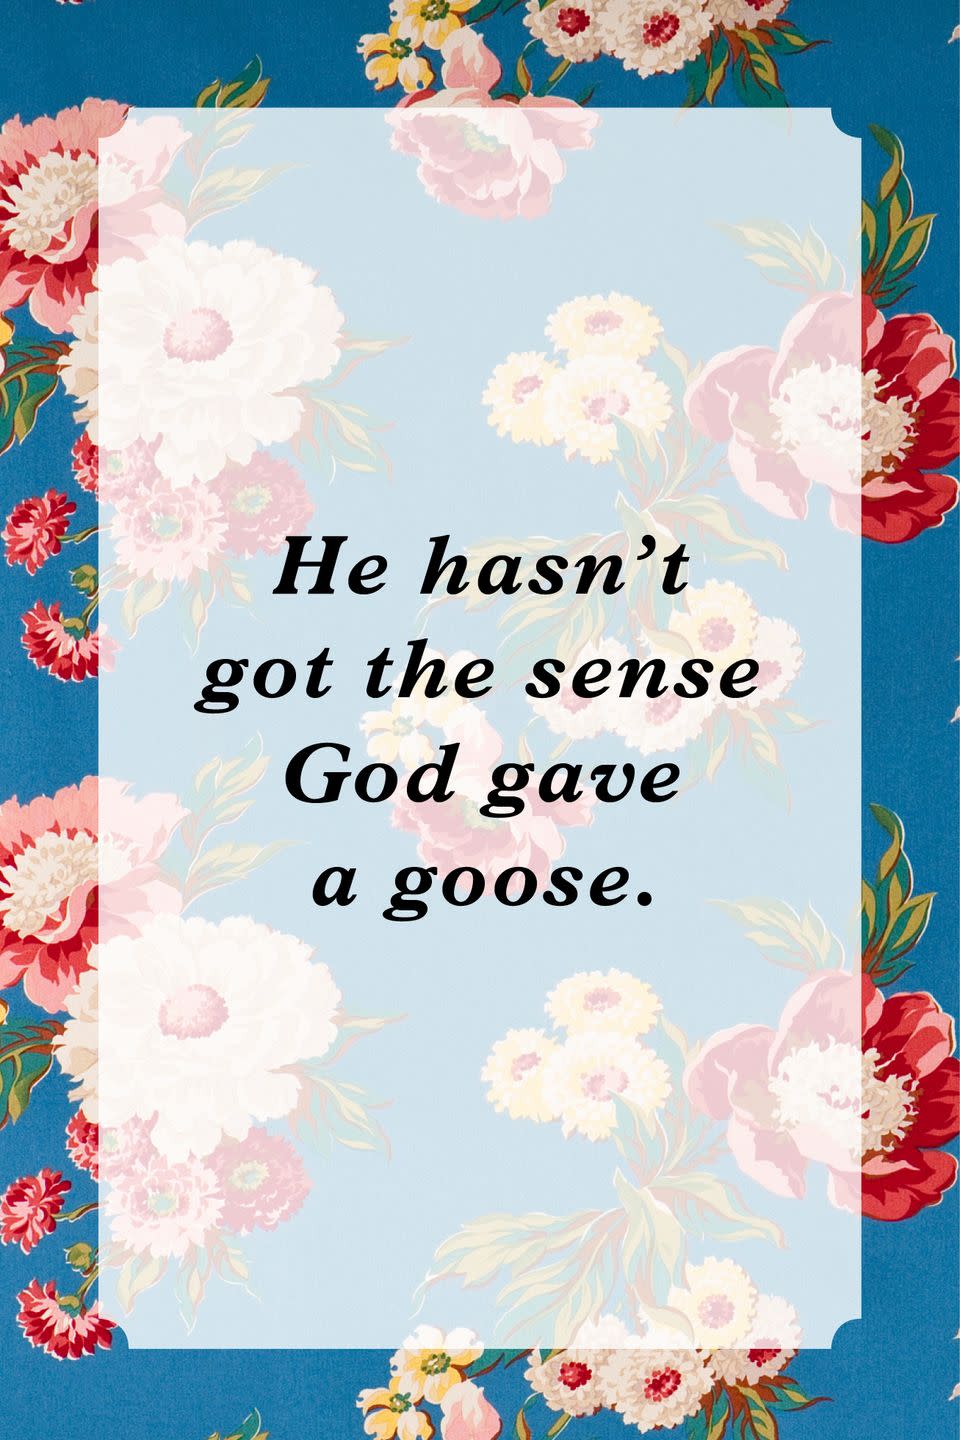 <p>"He hasn't got the sense God gave a goose."</p>